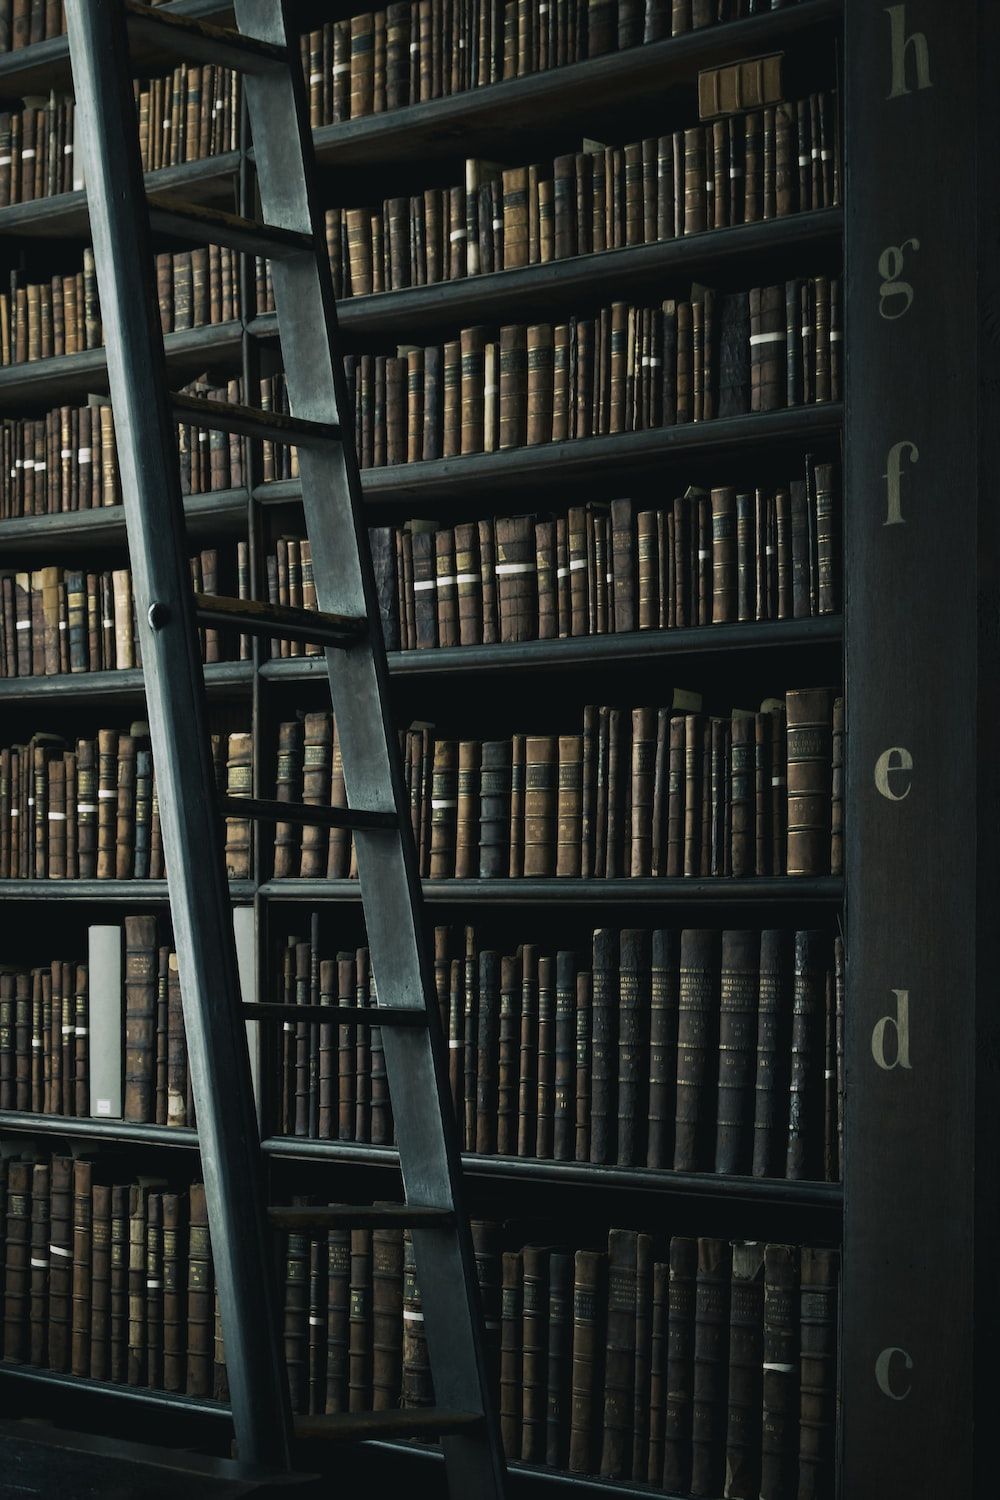  Bibliothek Hintergrundbild 1000x1500. Library shelf near black wooden ladder photo